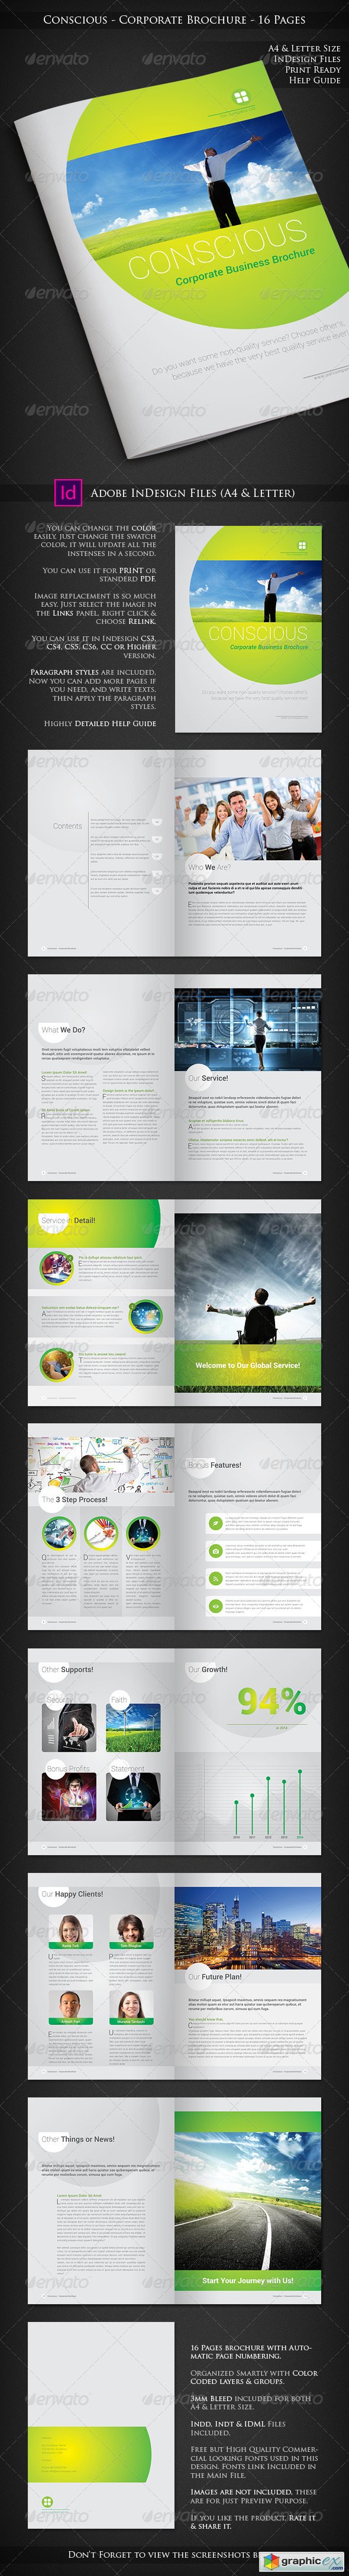 Conscious - Corporate Brochure Design - 16 Pages